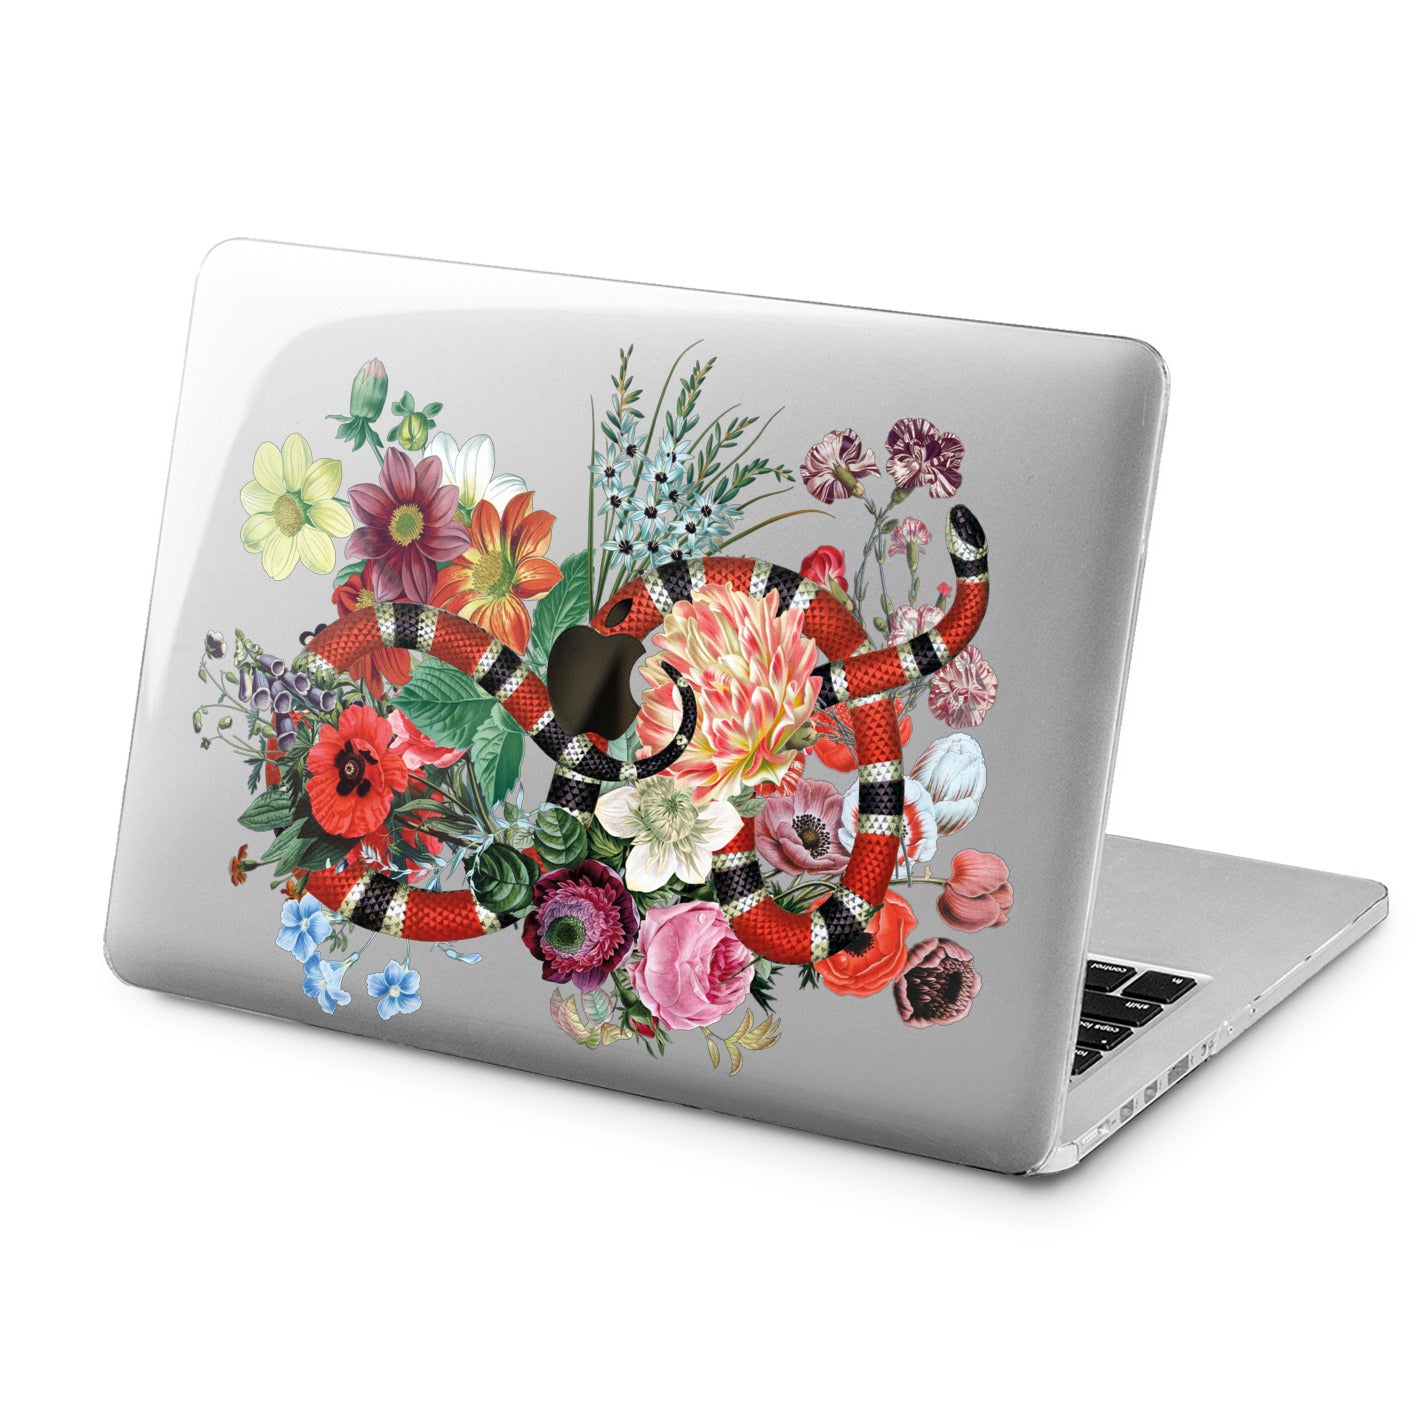 Lex Altern Lex Altern Red Snake Theme Case for your Laptop Apple Macbook.